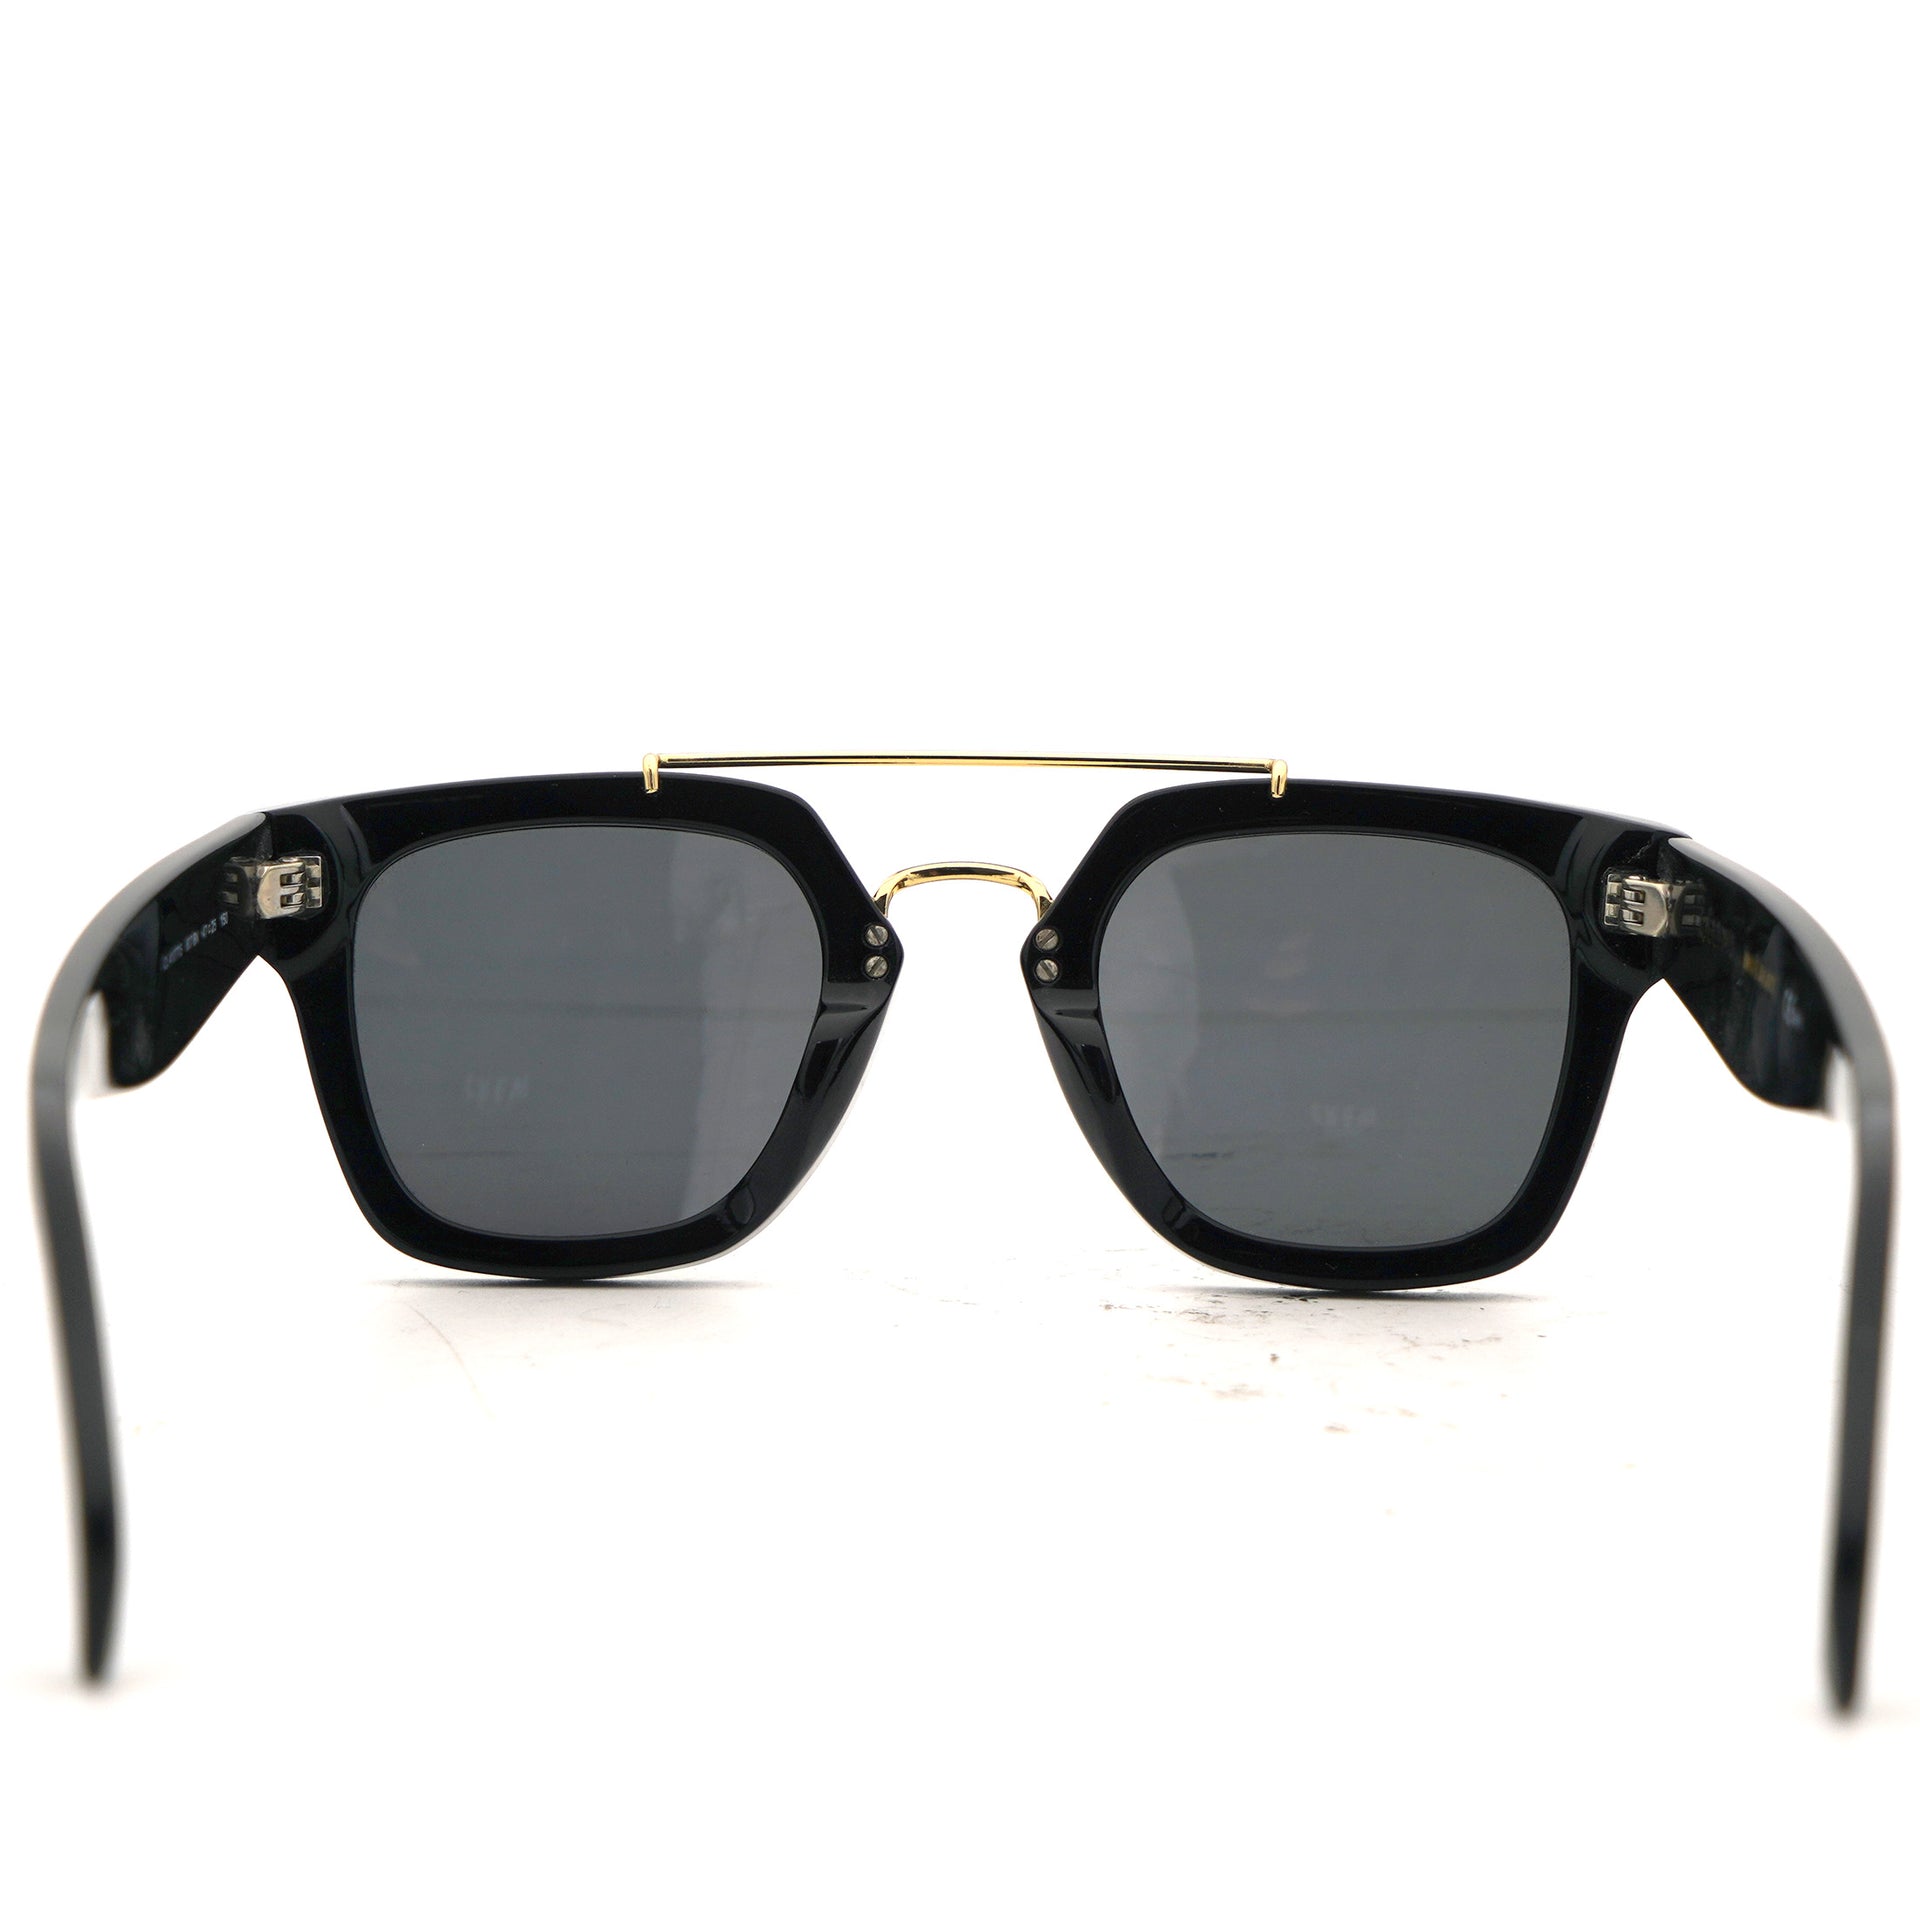 Bar Top Square Sunglasses